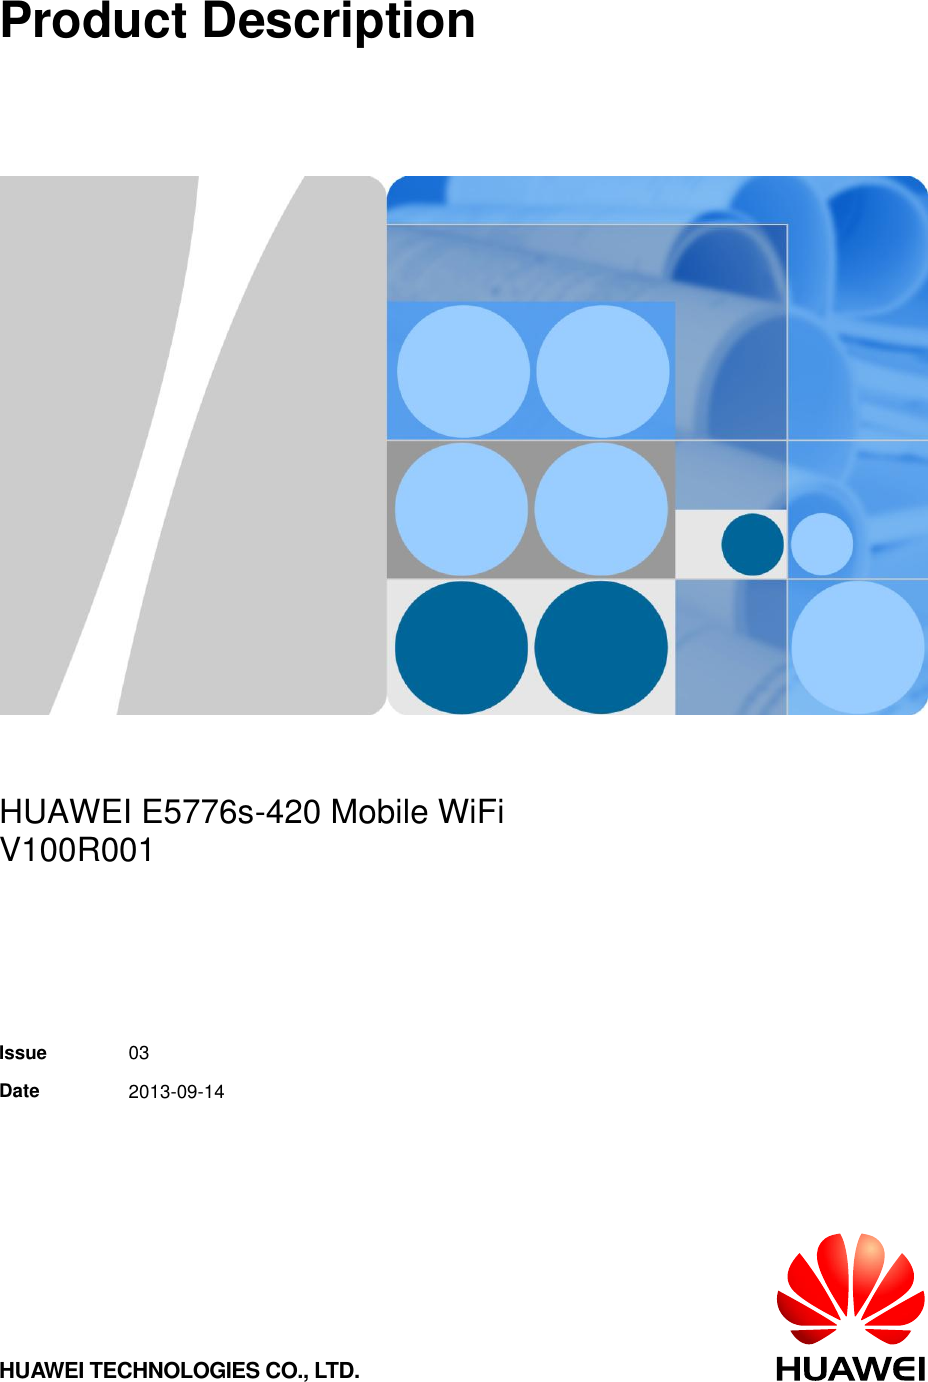      Product Description      HUAWEI E5776s-420 Mobile WiFi V100R001   Issue 03 Date 2013-09-14  HUAWEI TECHNOLOGIES CO., LTD.  